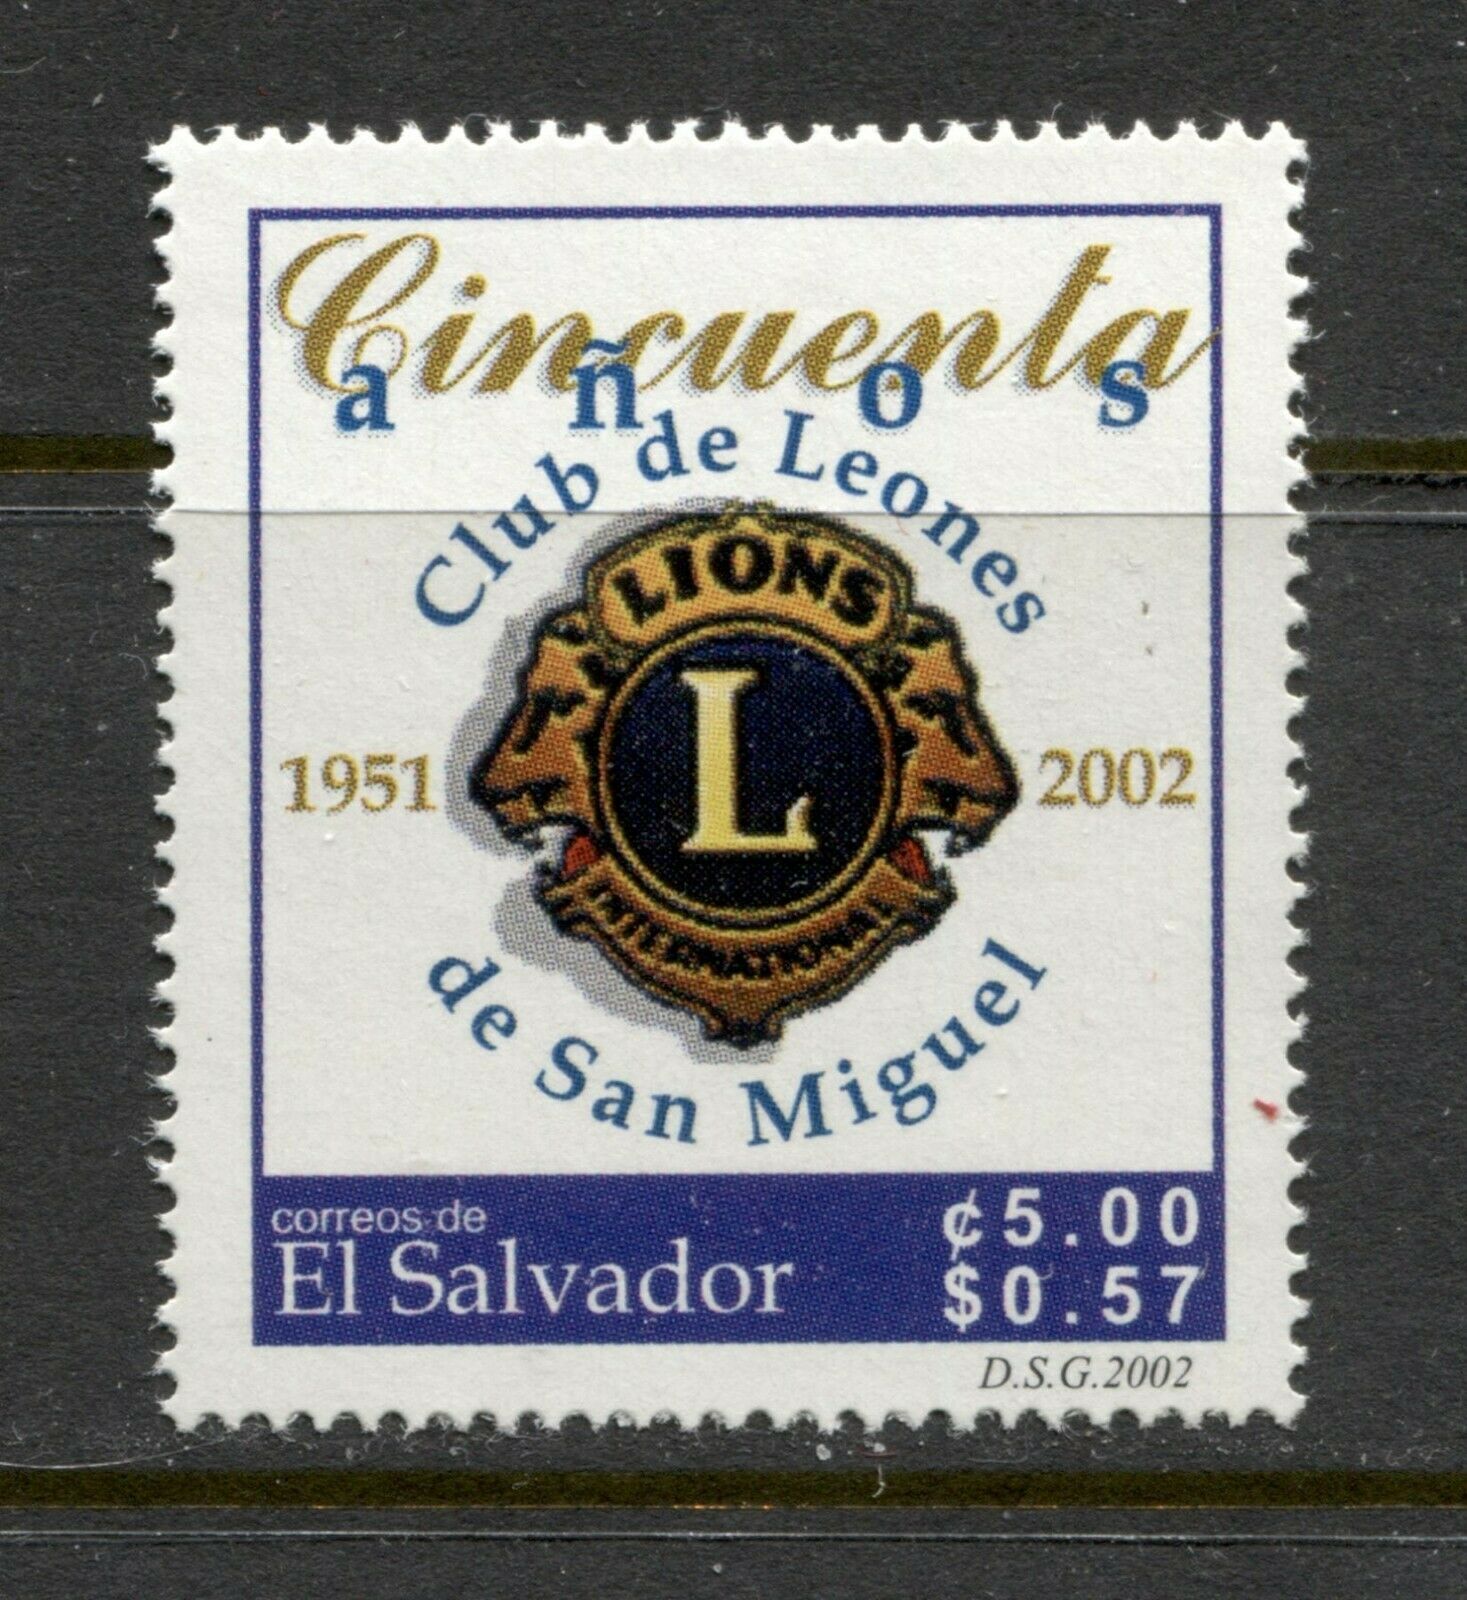 El Salvador 2002, Lions Club International - 51st  Anniversary, Scott 1556, Mnh